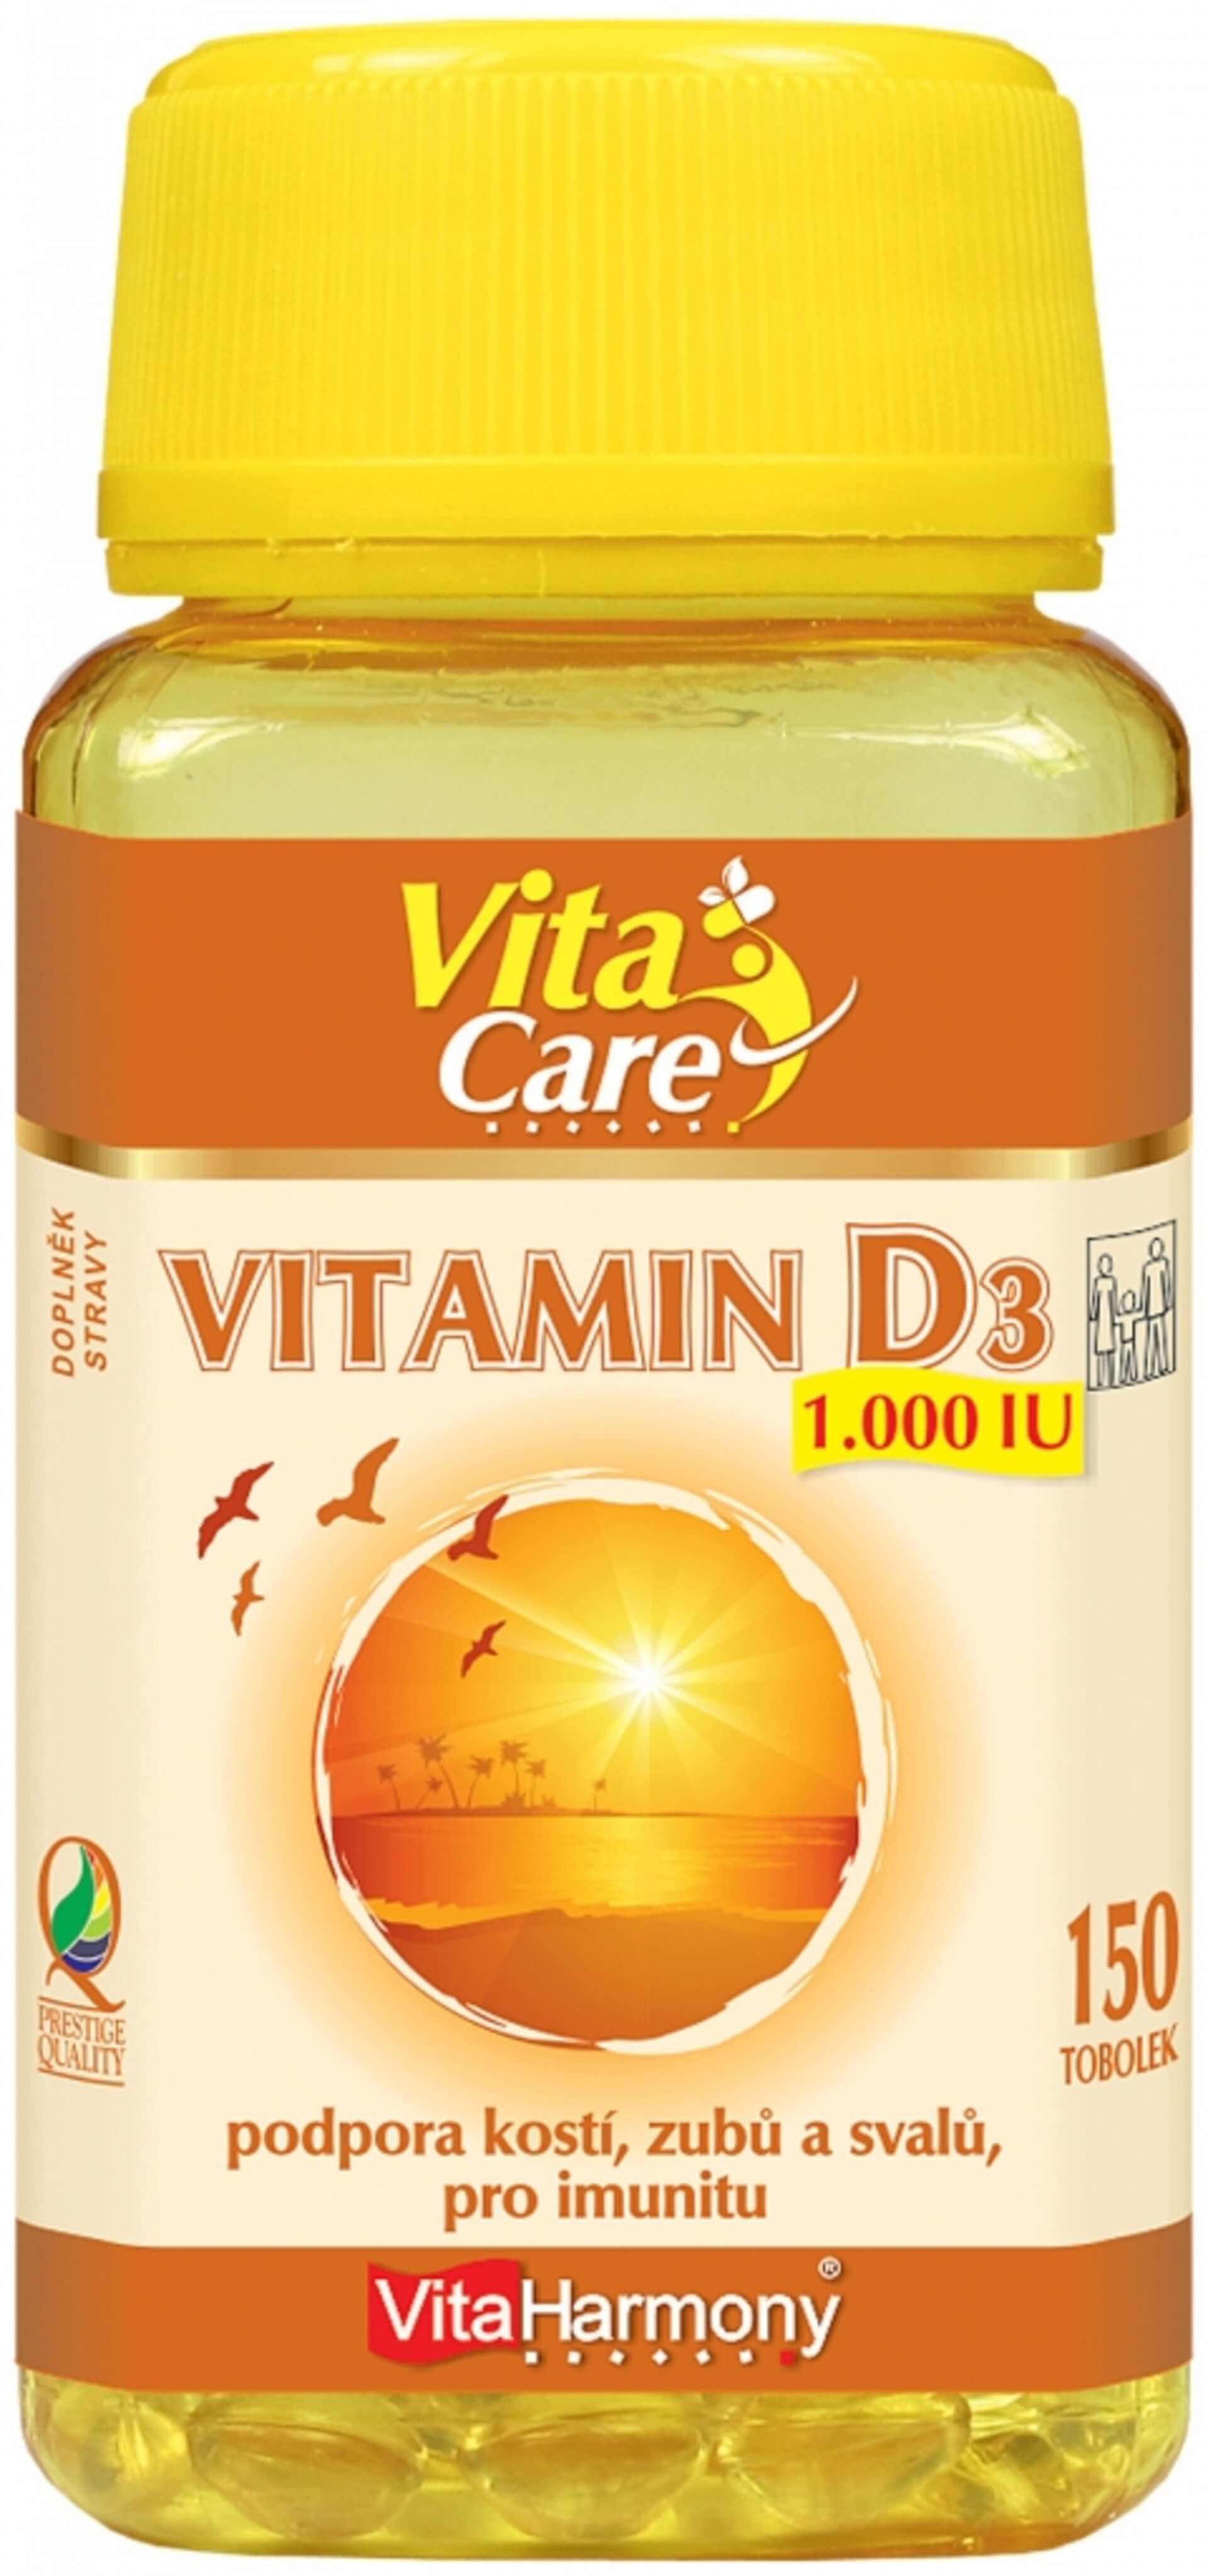 E-shop VitaHarmony Vitamín D3 1000 mj 25 mikrogramov 150 kapsúl